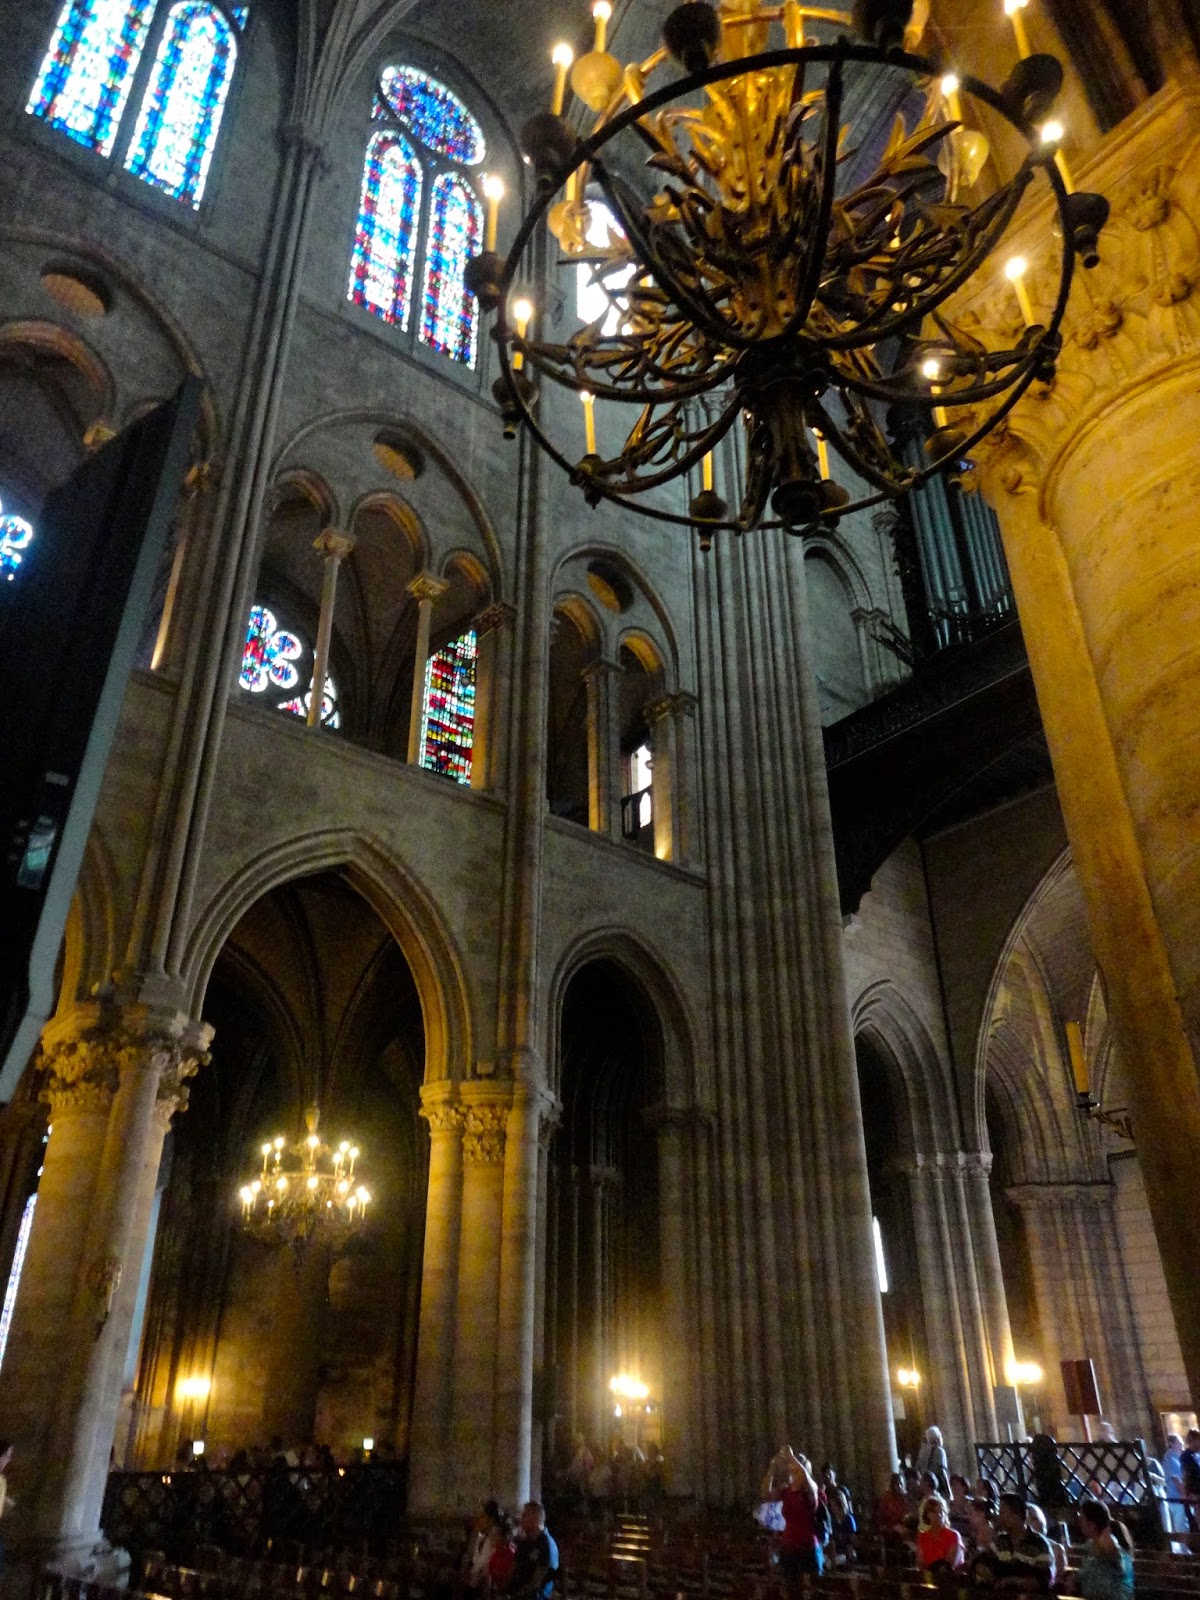 Interior of Notre Dame cathedral, Paris